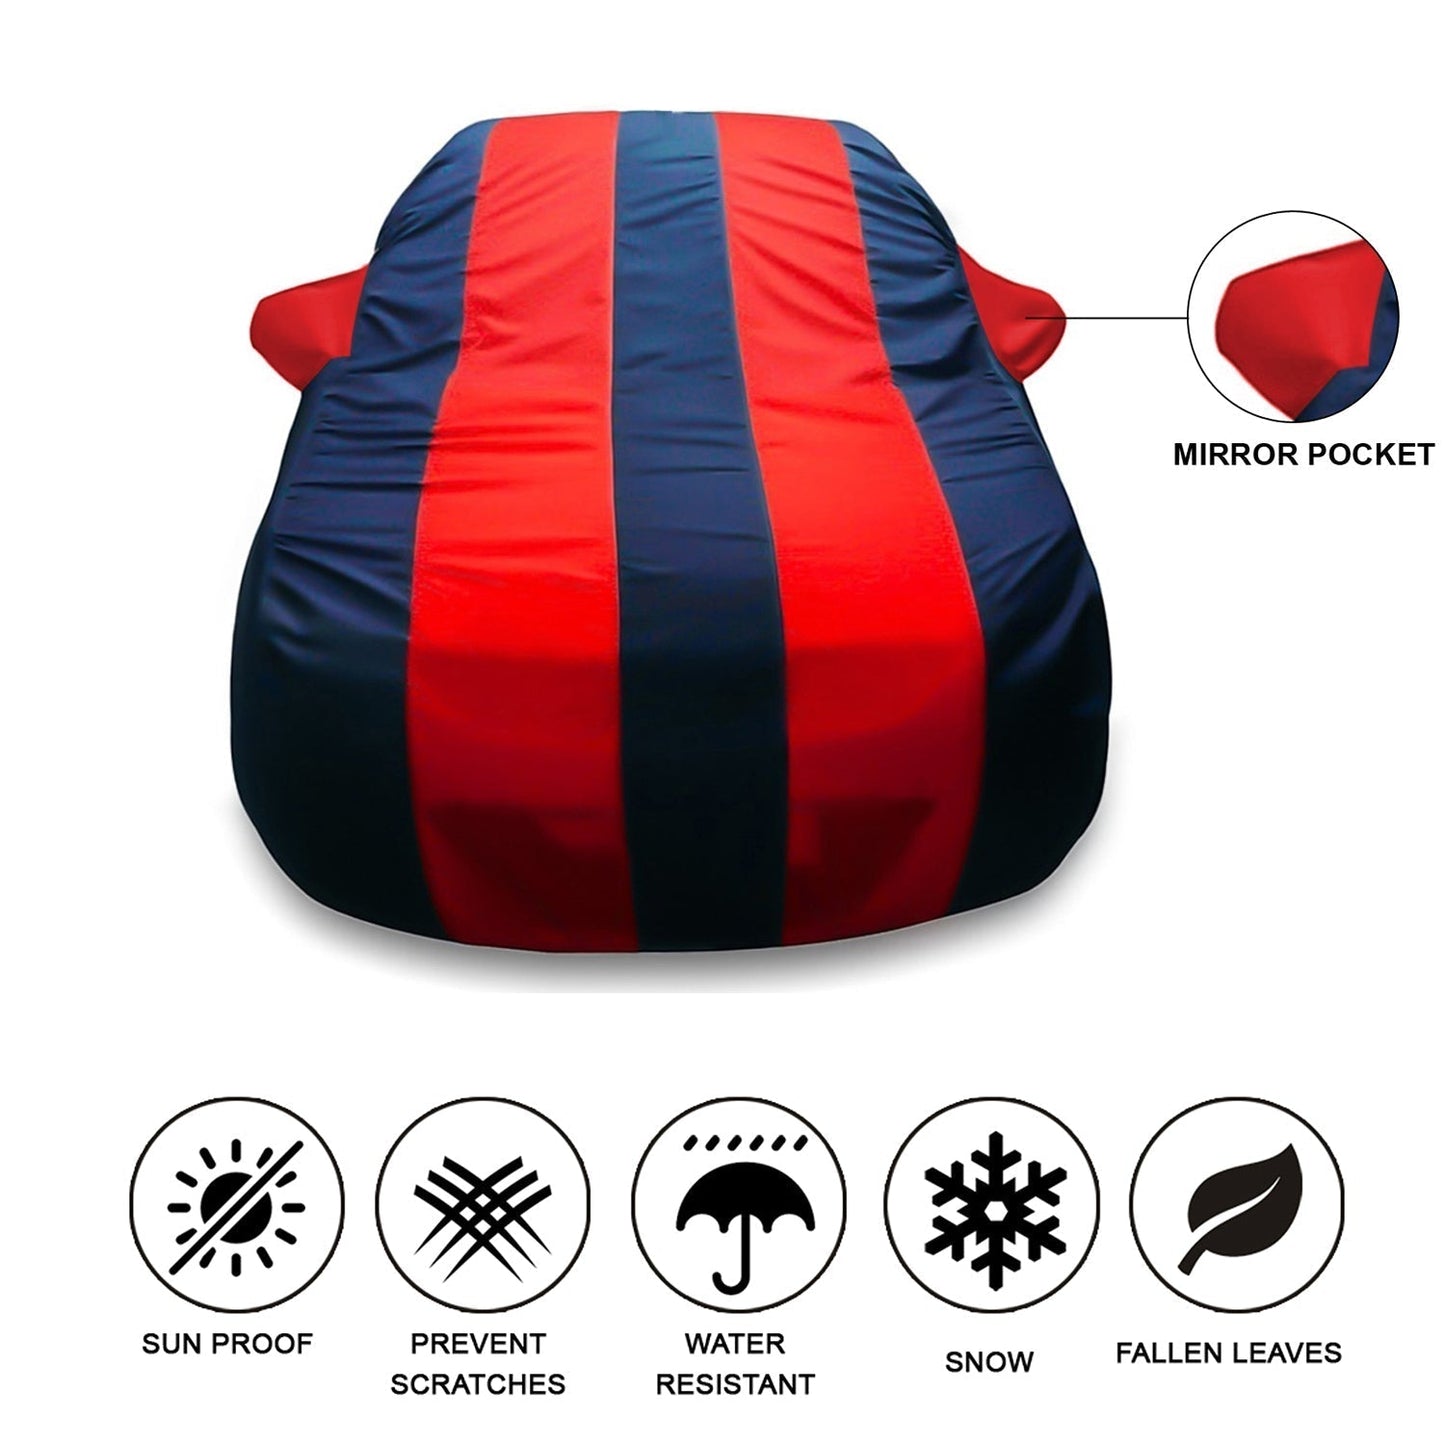 Oshotto Taffeta Car Body Cover with Mirror Pocket For Tata Aria (Red, Blue)